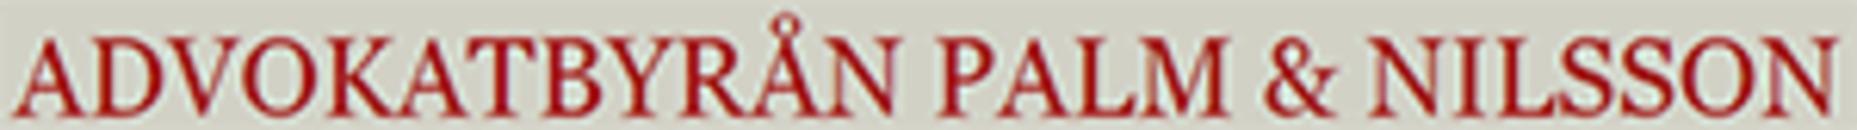 Advokatbyrån Palm & Nilsson logo